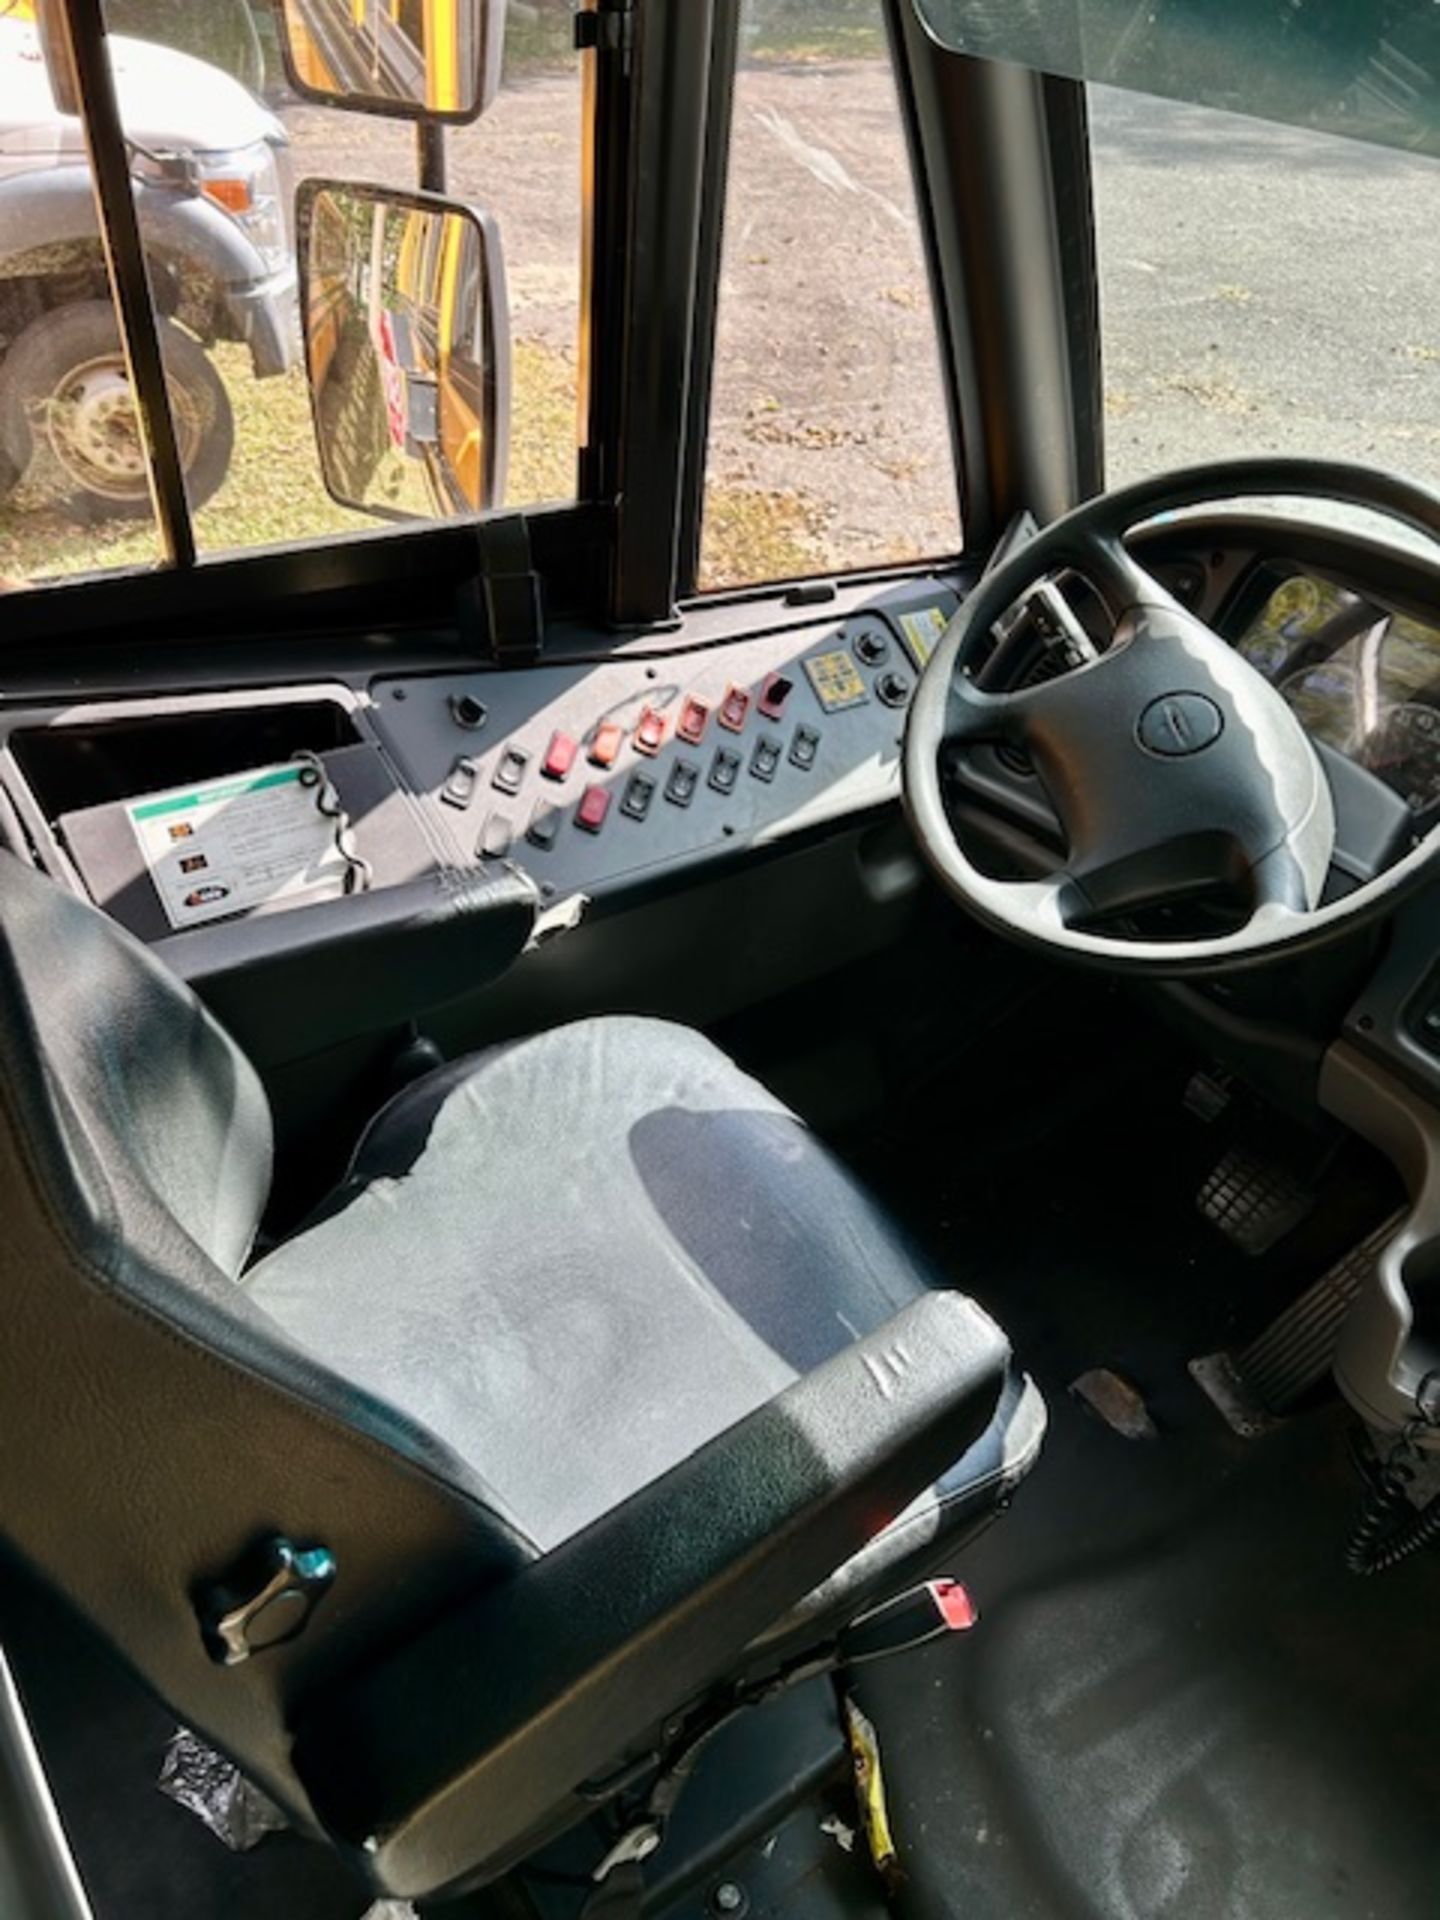 2018 Thomas 54 Seat School Bus - Image 7 of 14